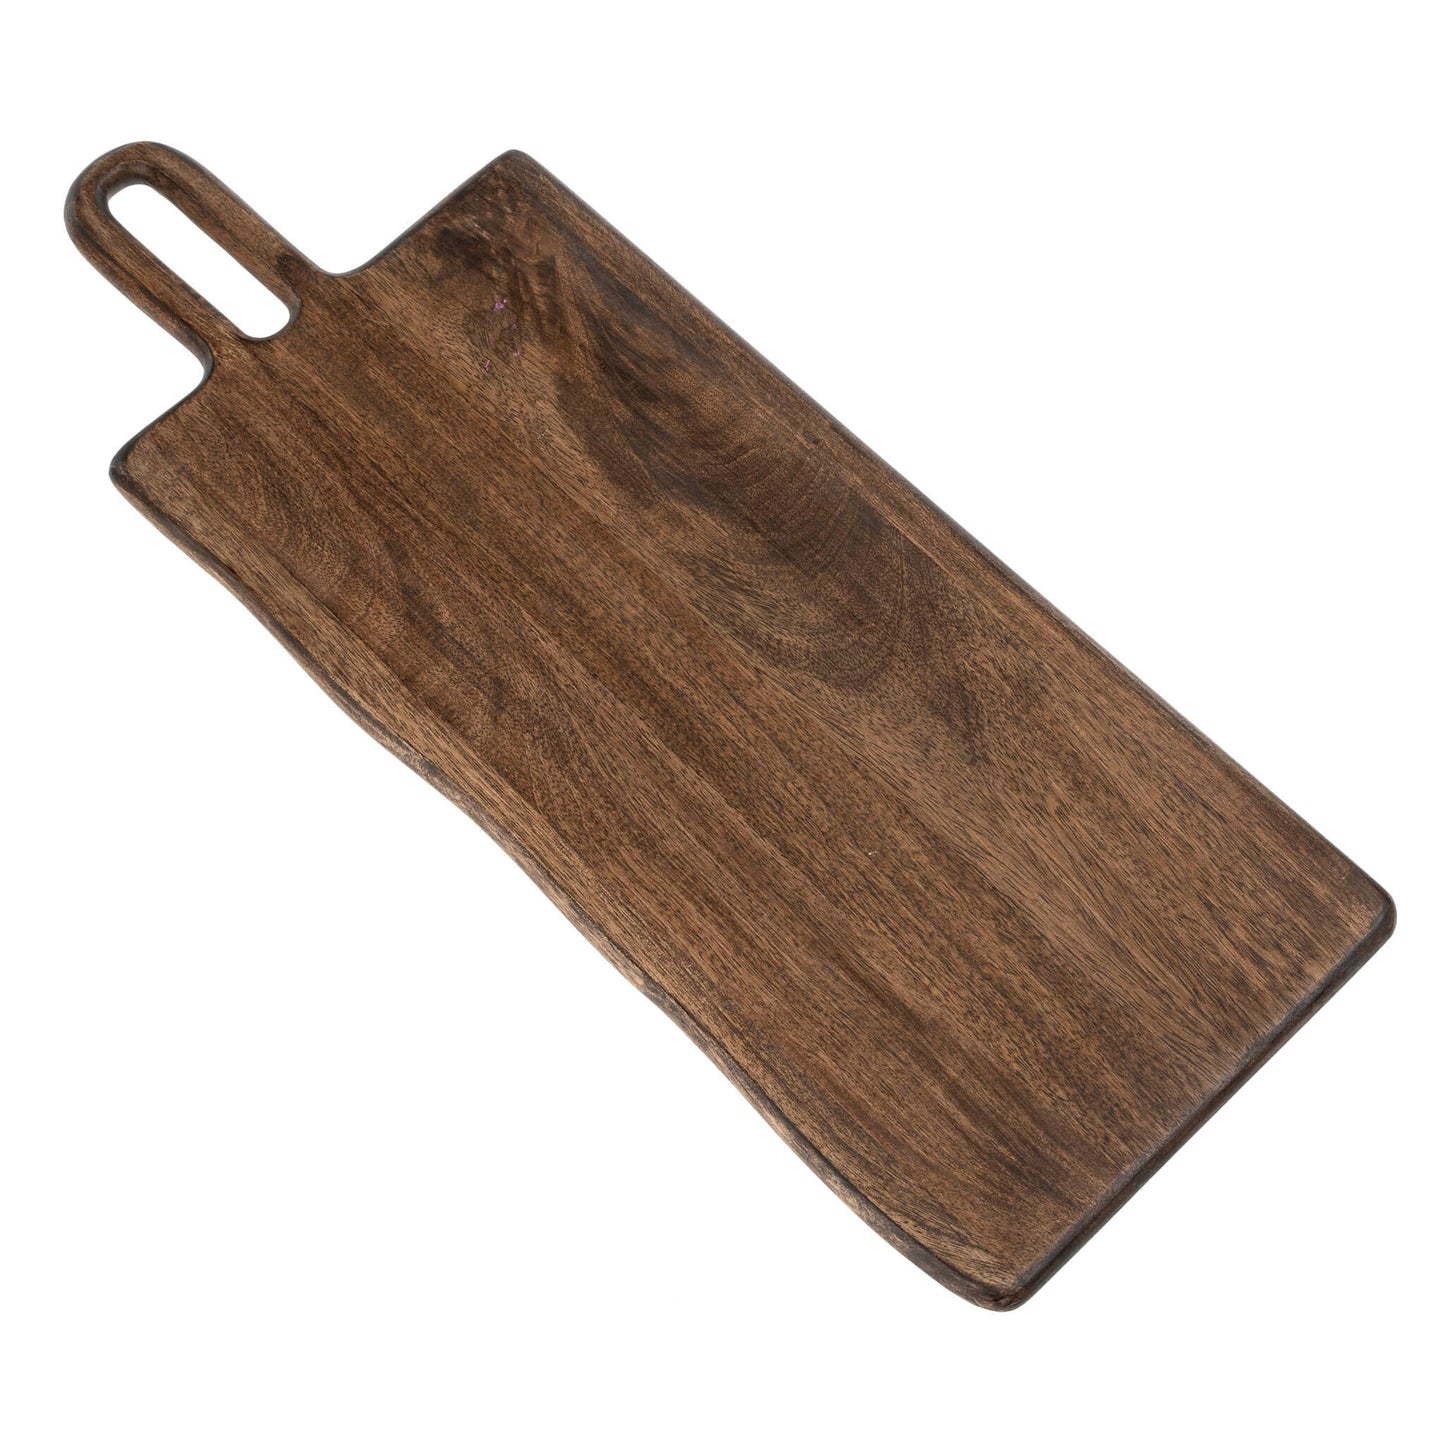 Driftwood Chopping Board Large